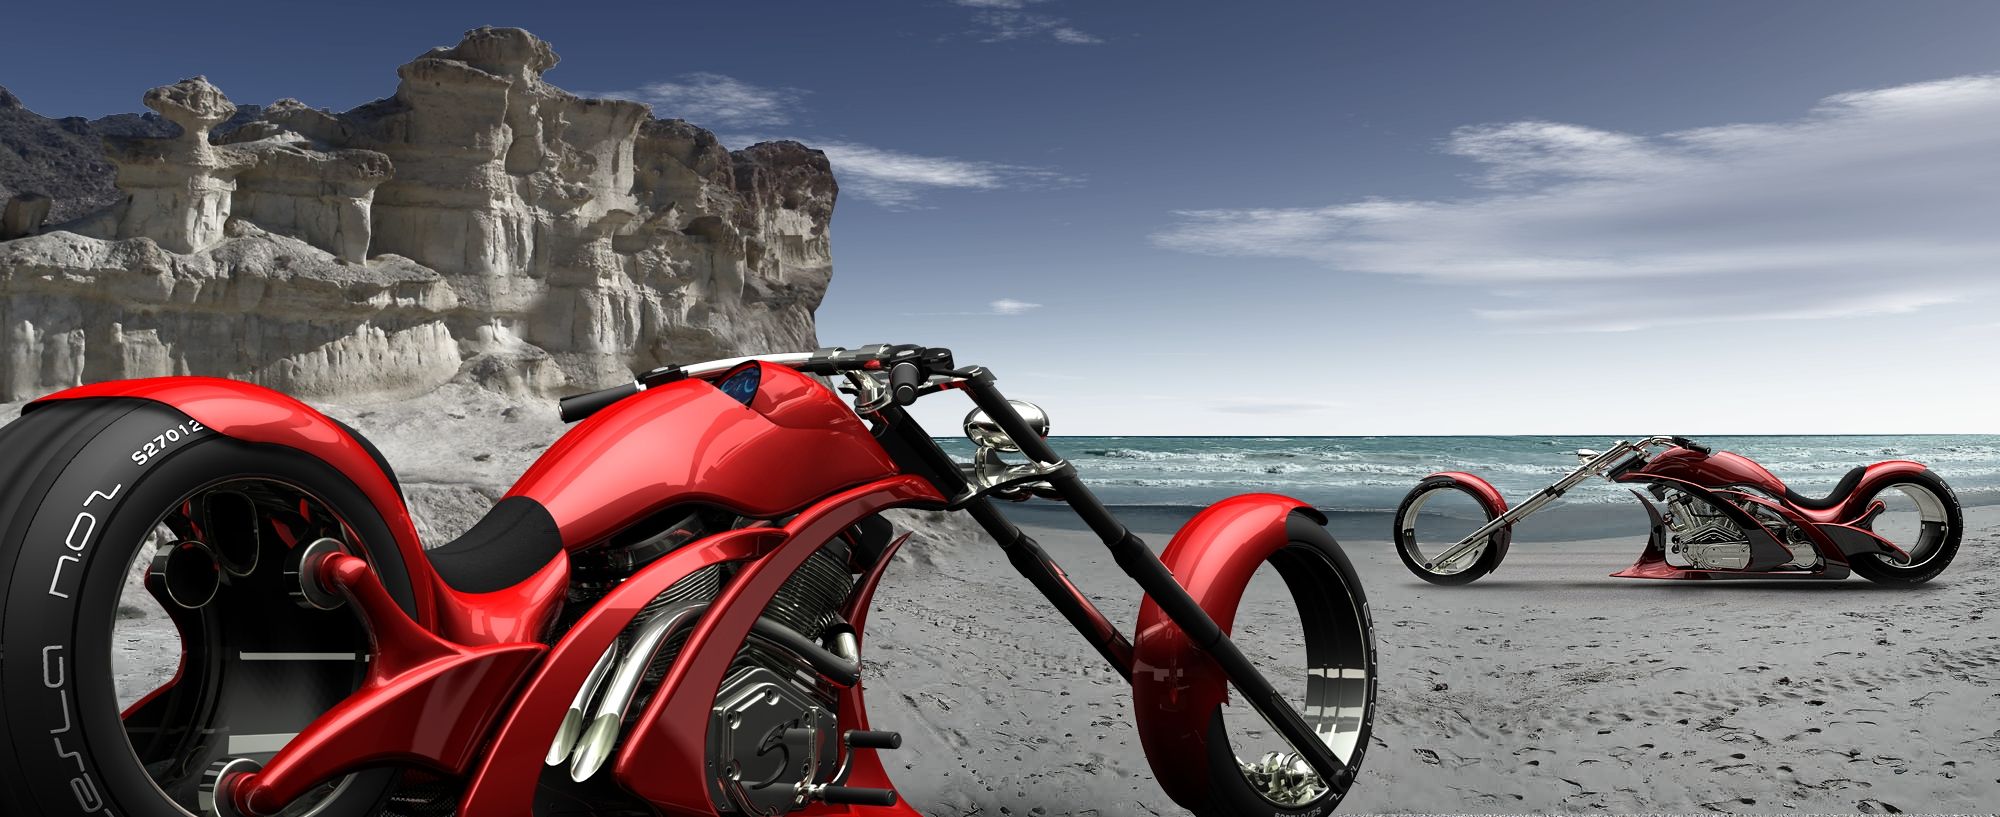 Swordfish Motorcycle Concept.